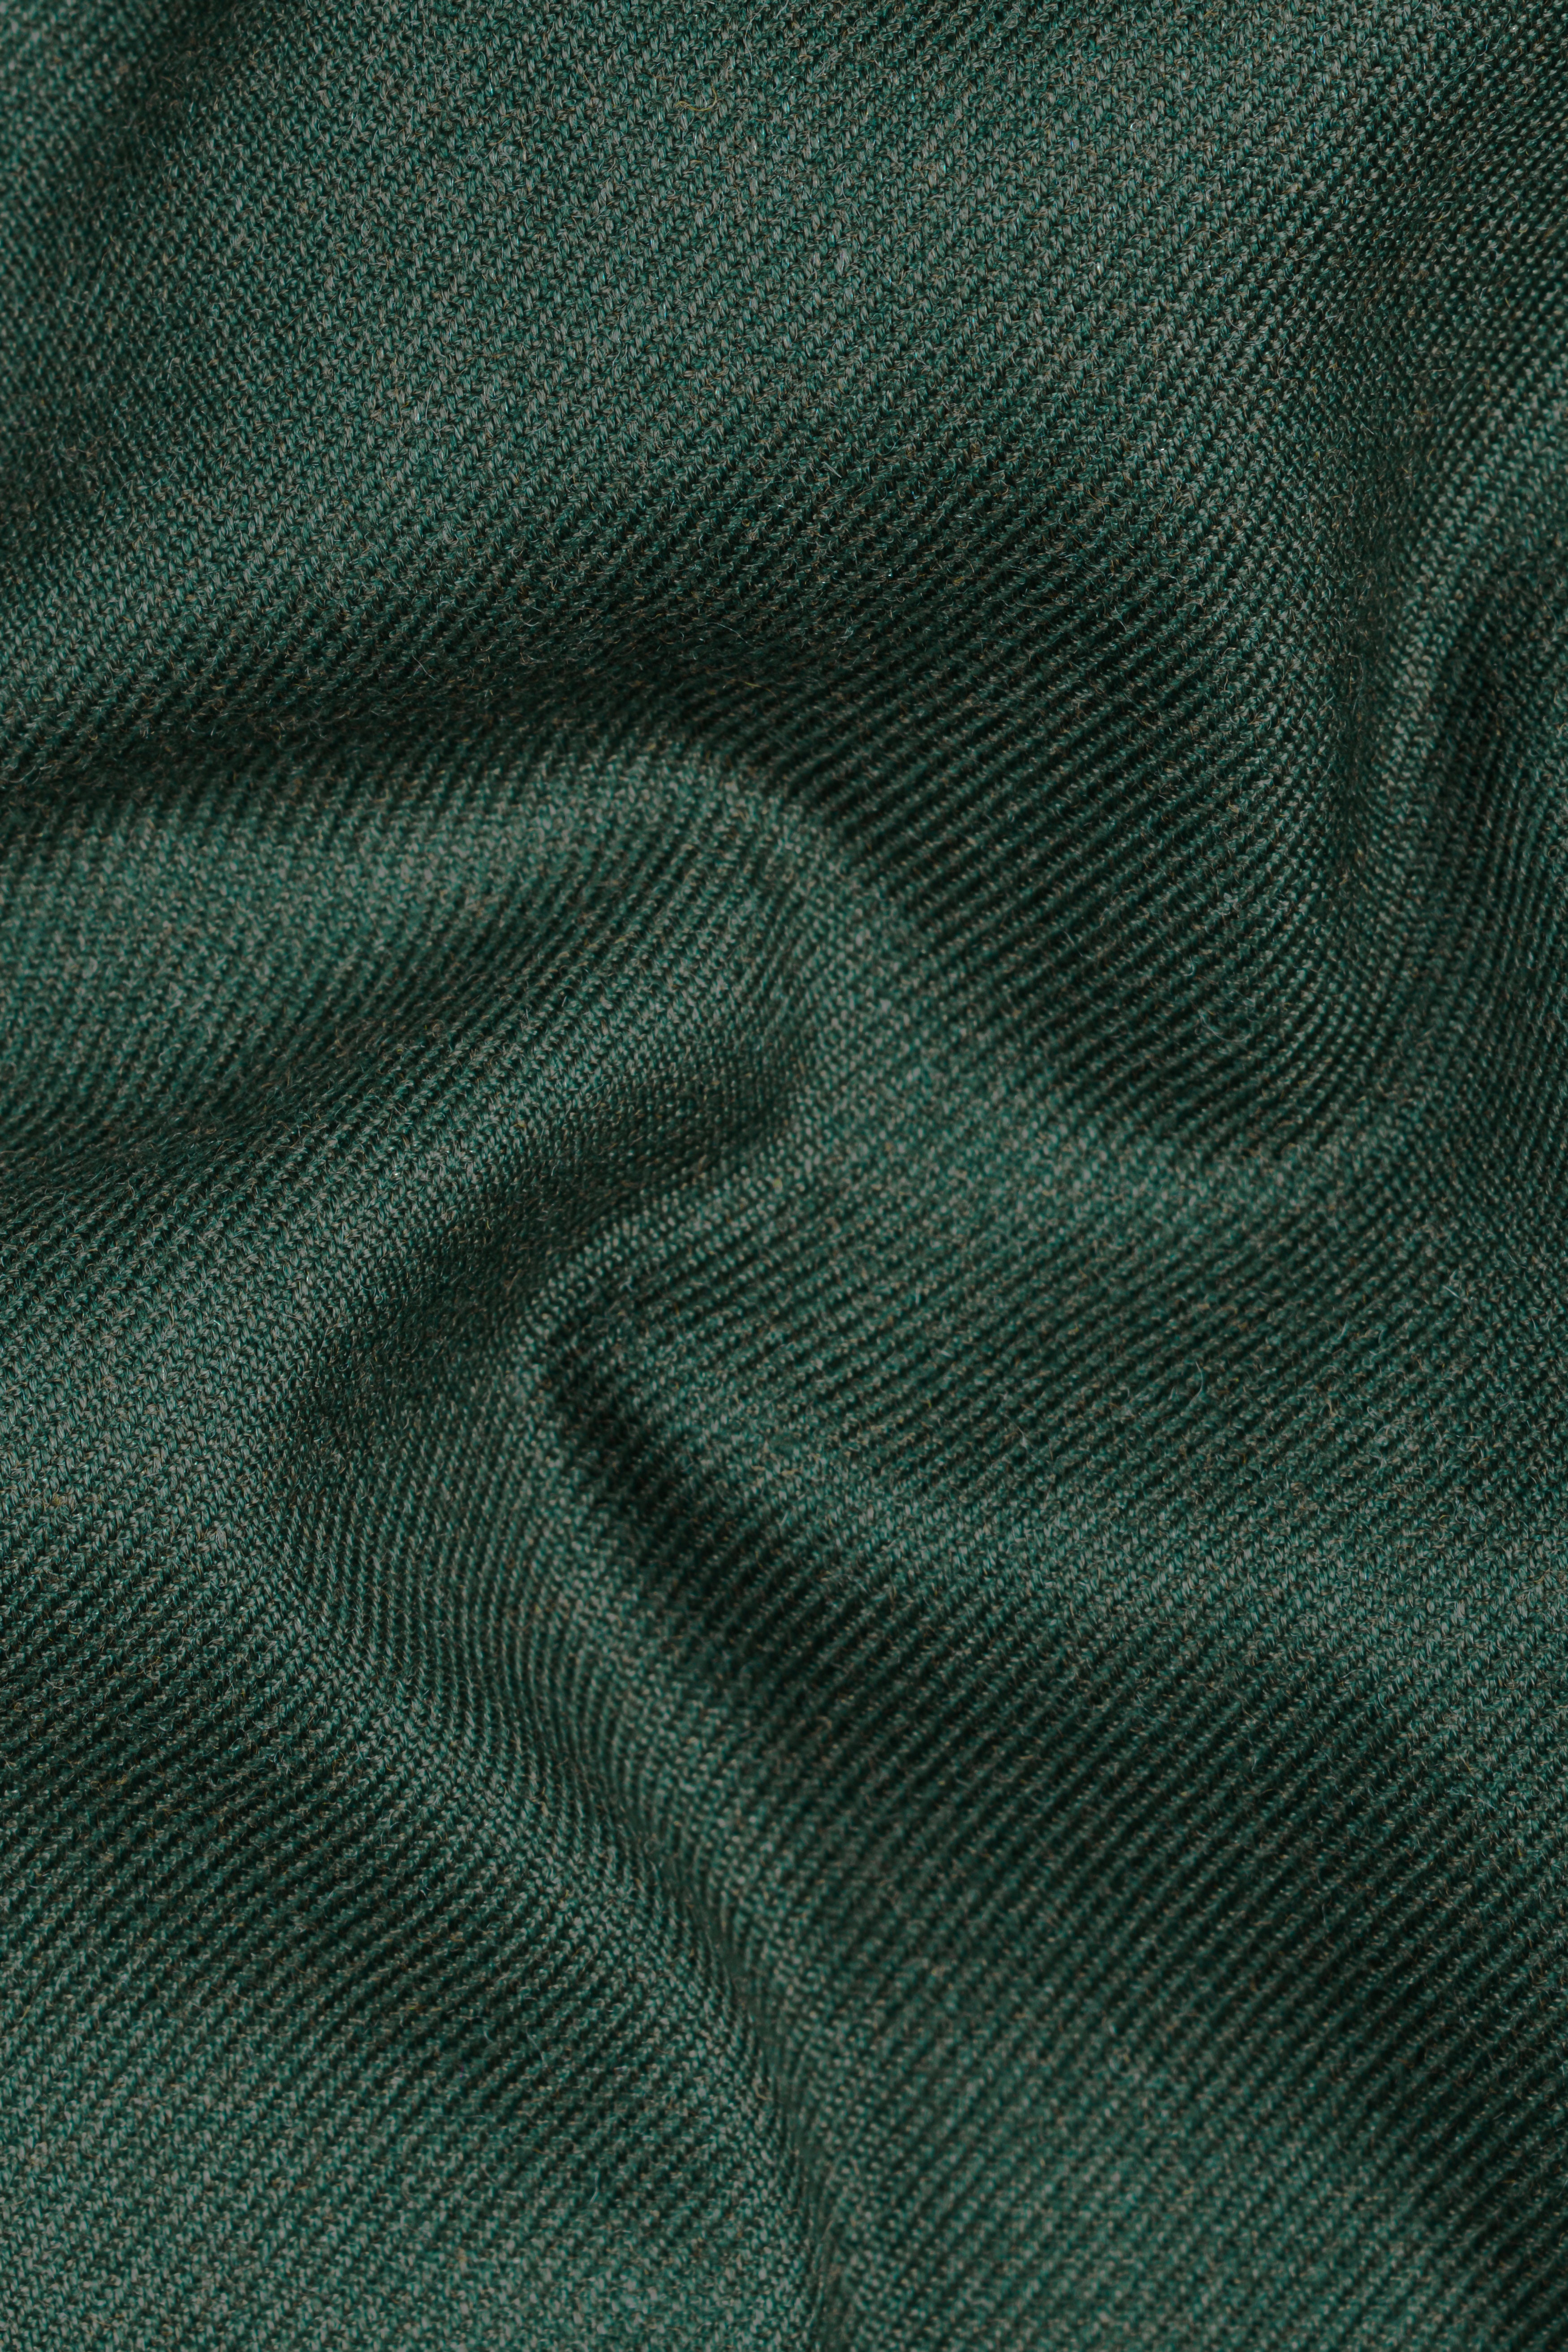 Plantation Green Textured Tweed Suit